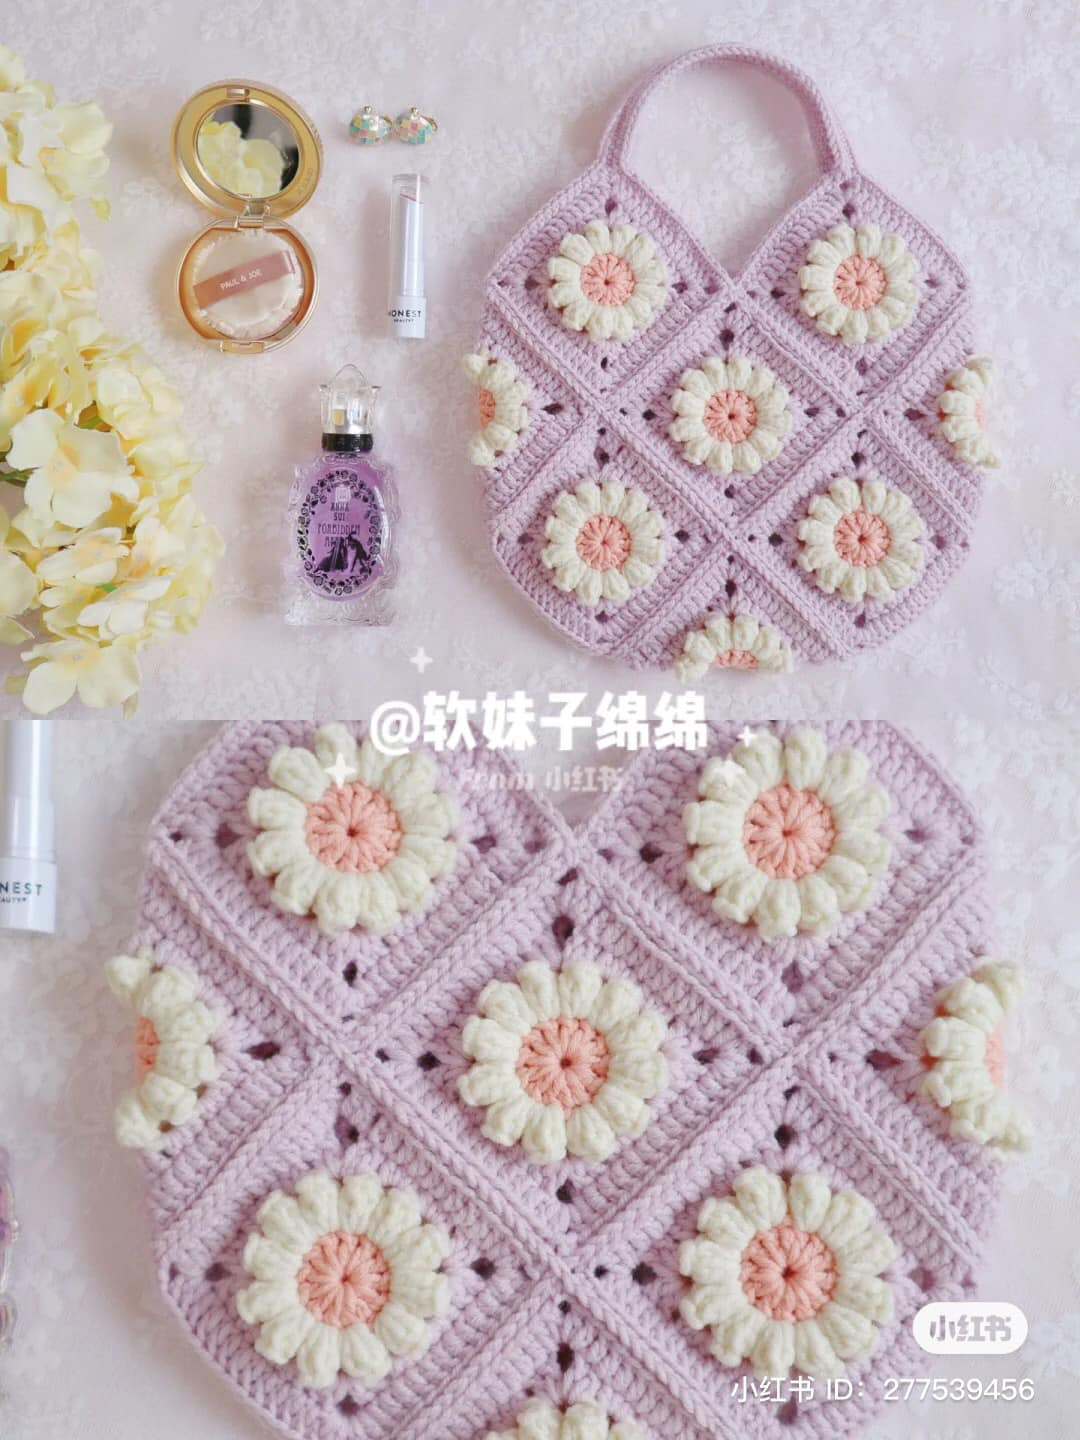 crochet pattern handbag purple floral pattern.